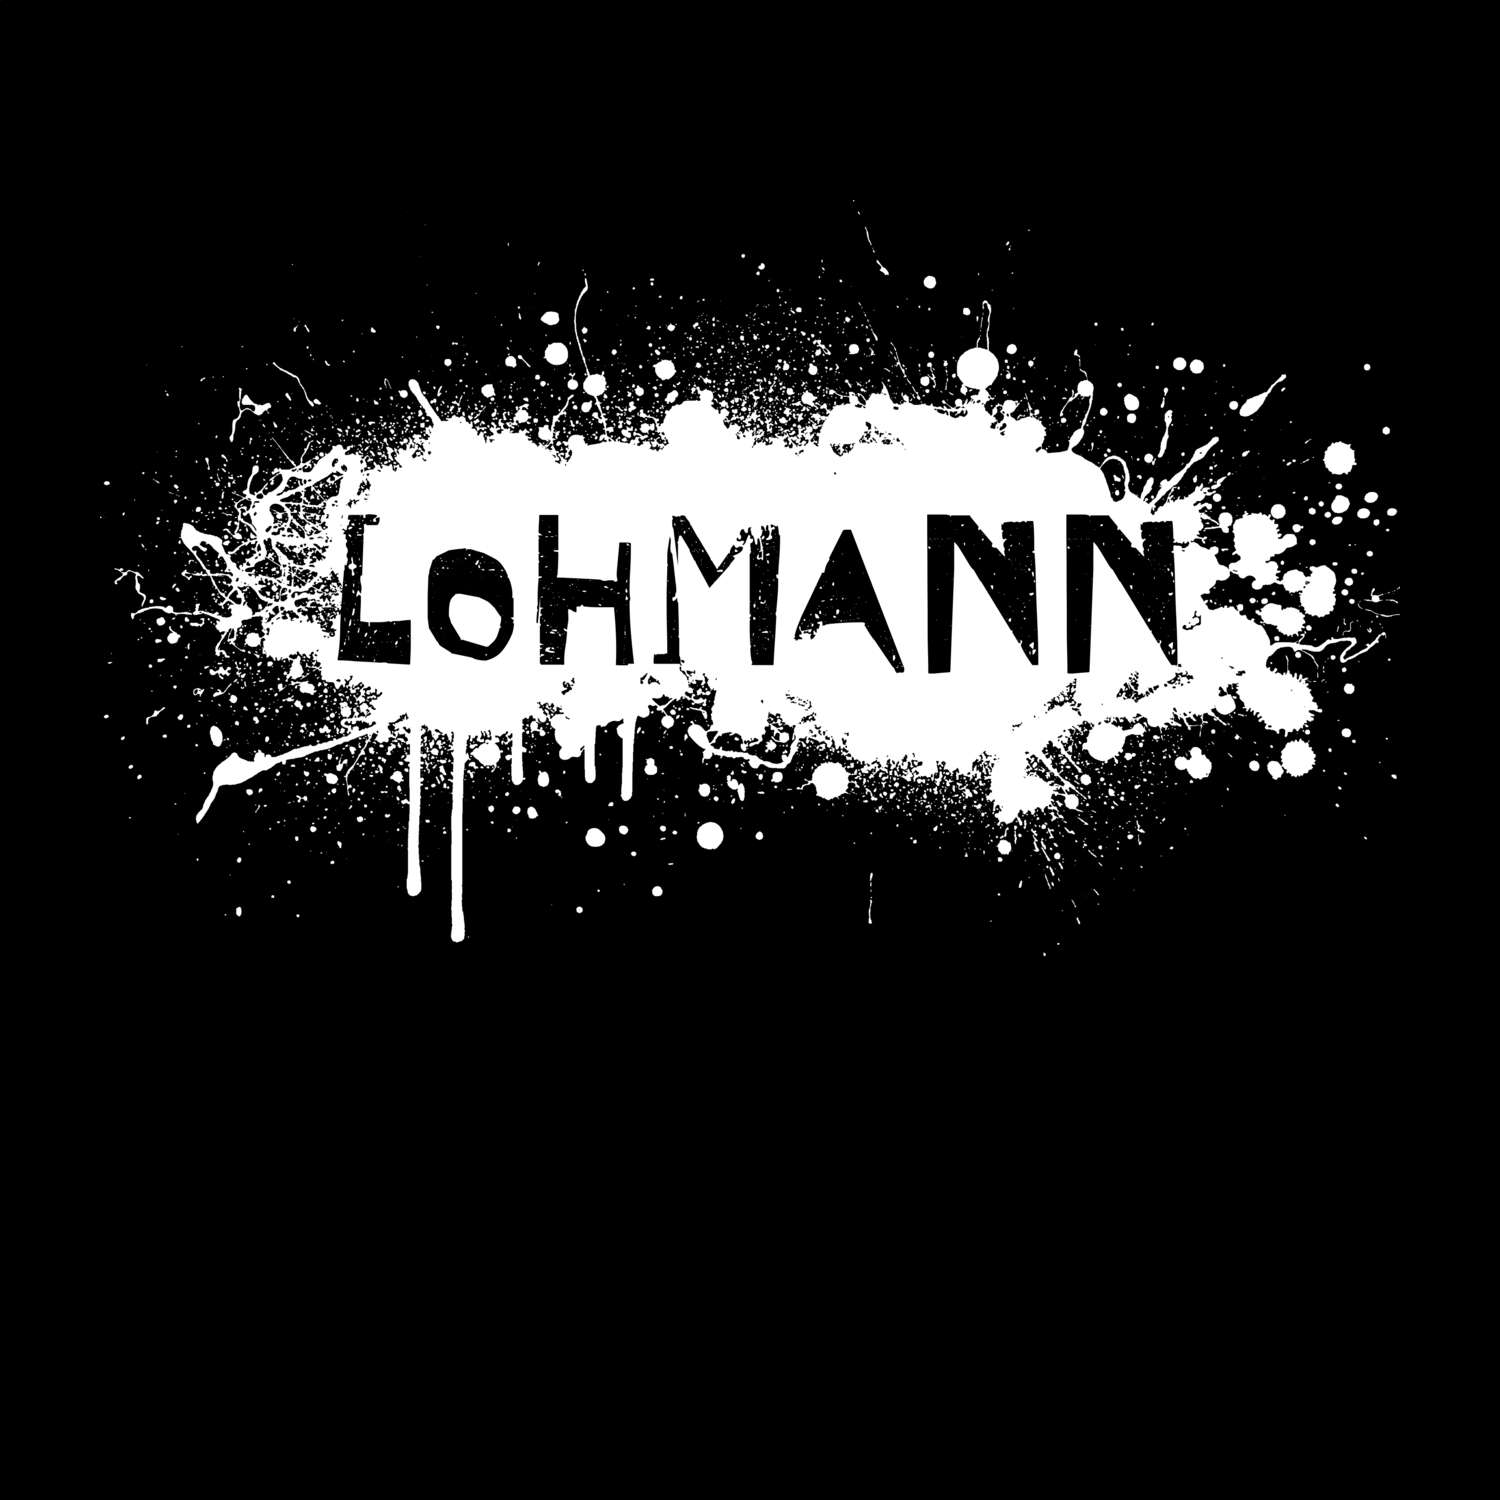 Lohmann T-Shirt »Paint Splash Punk«